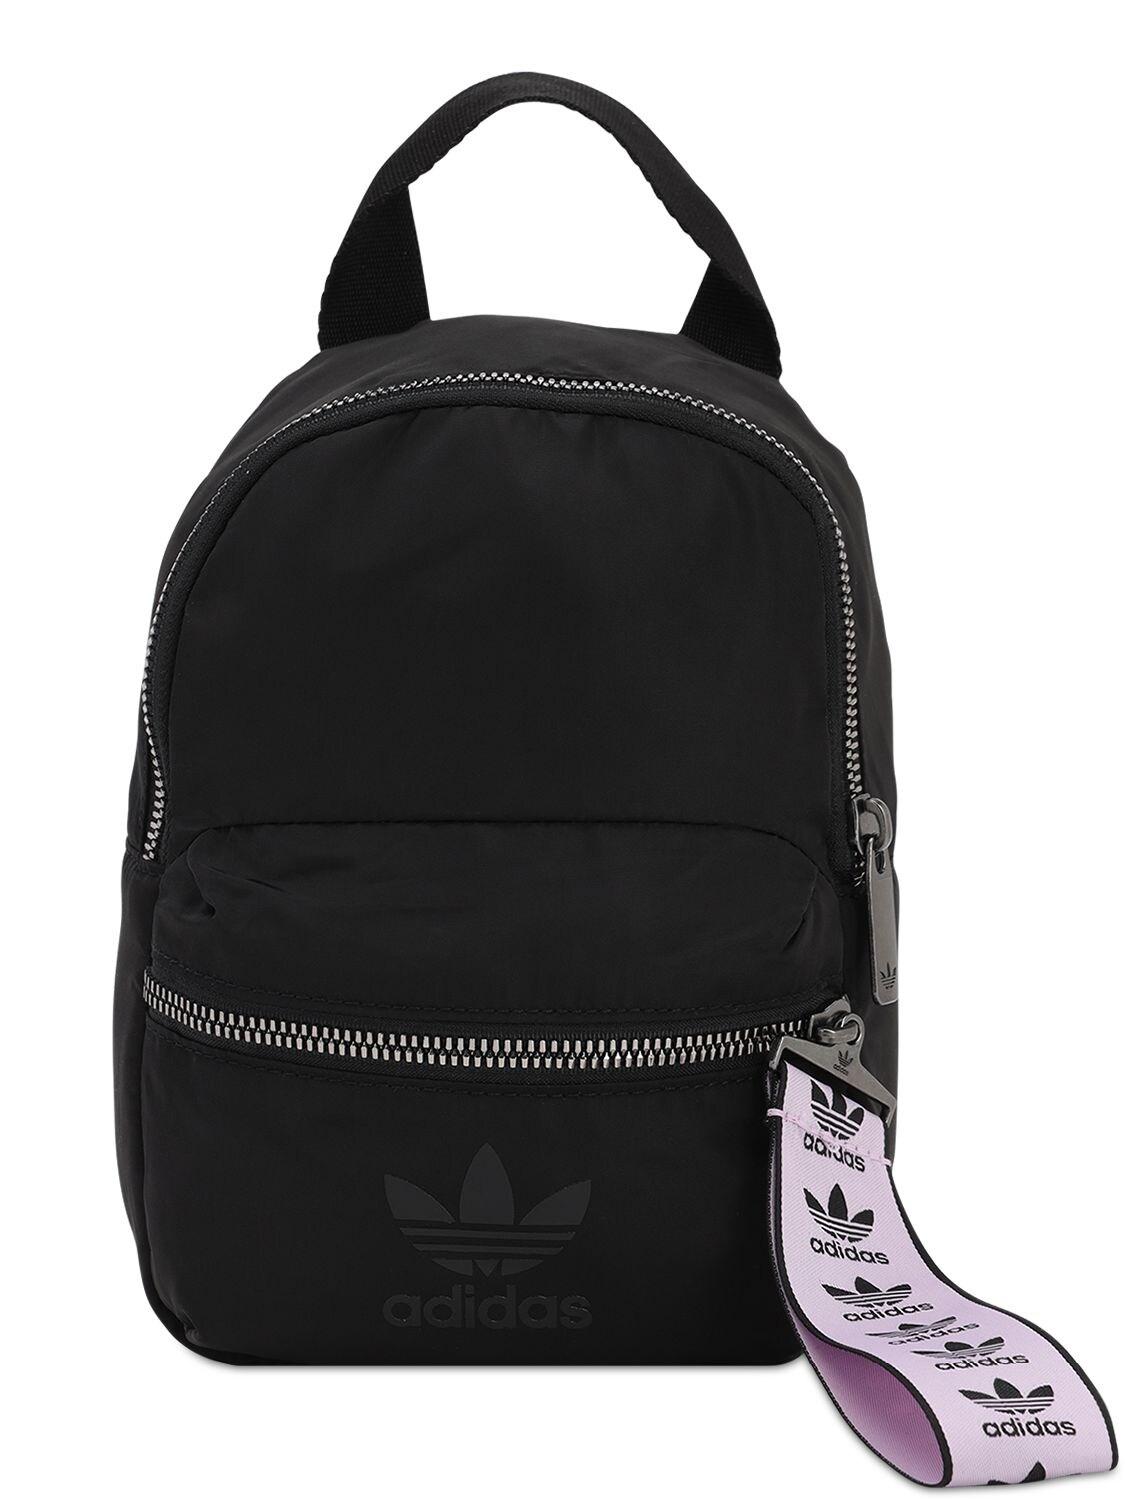 adidas Originals Mini Logo Backpack in Black - Lyst